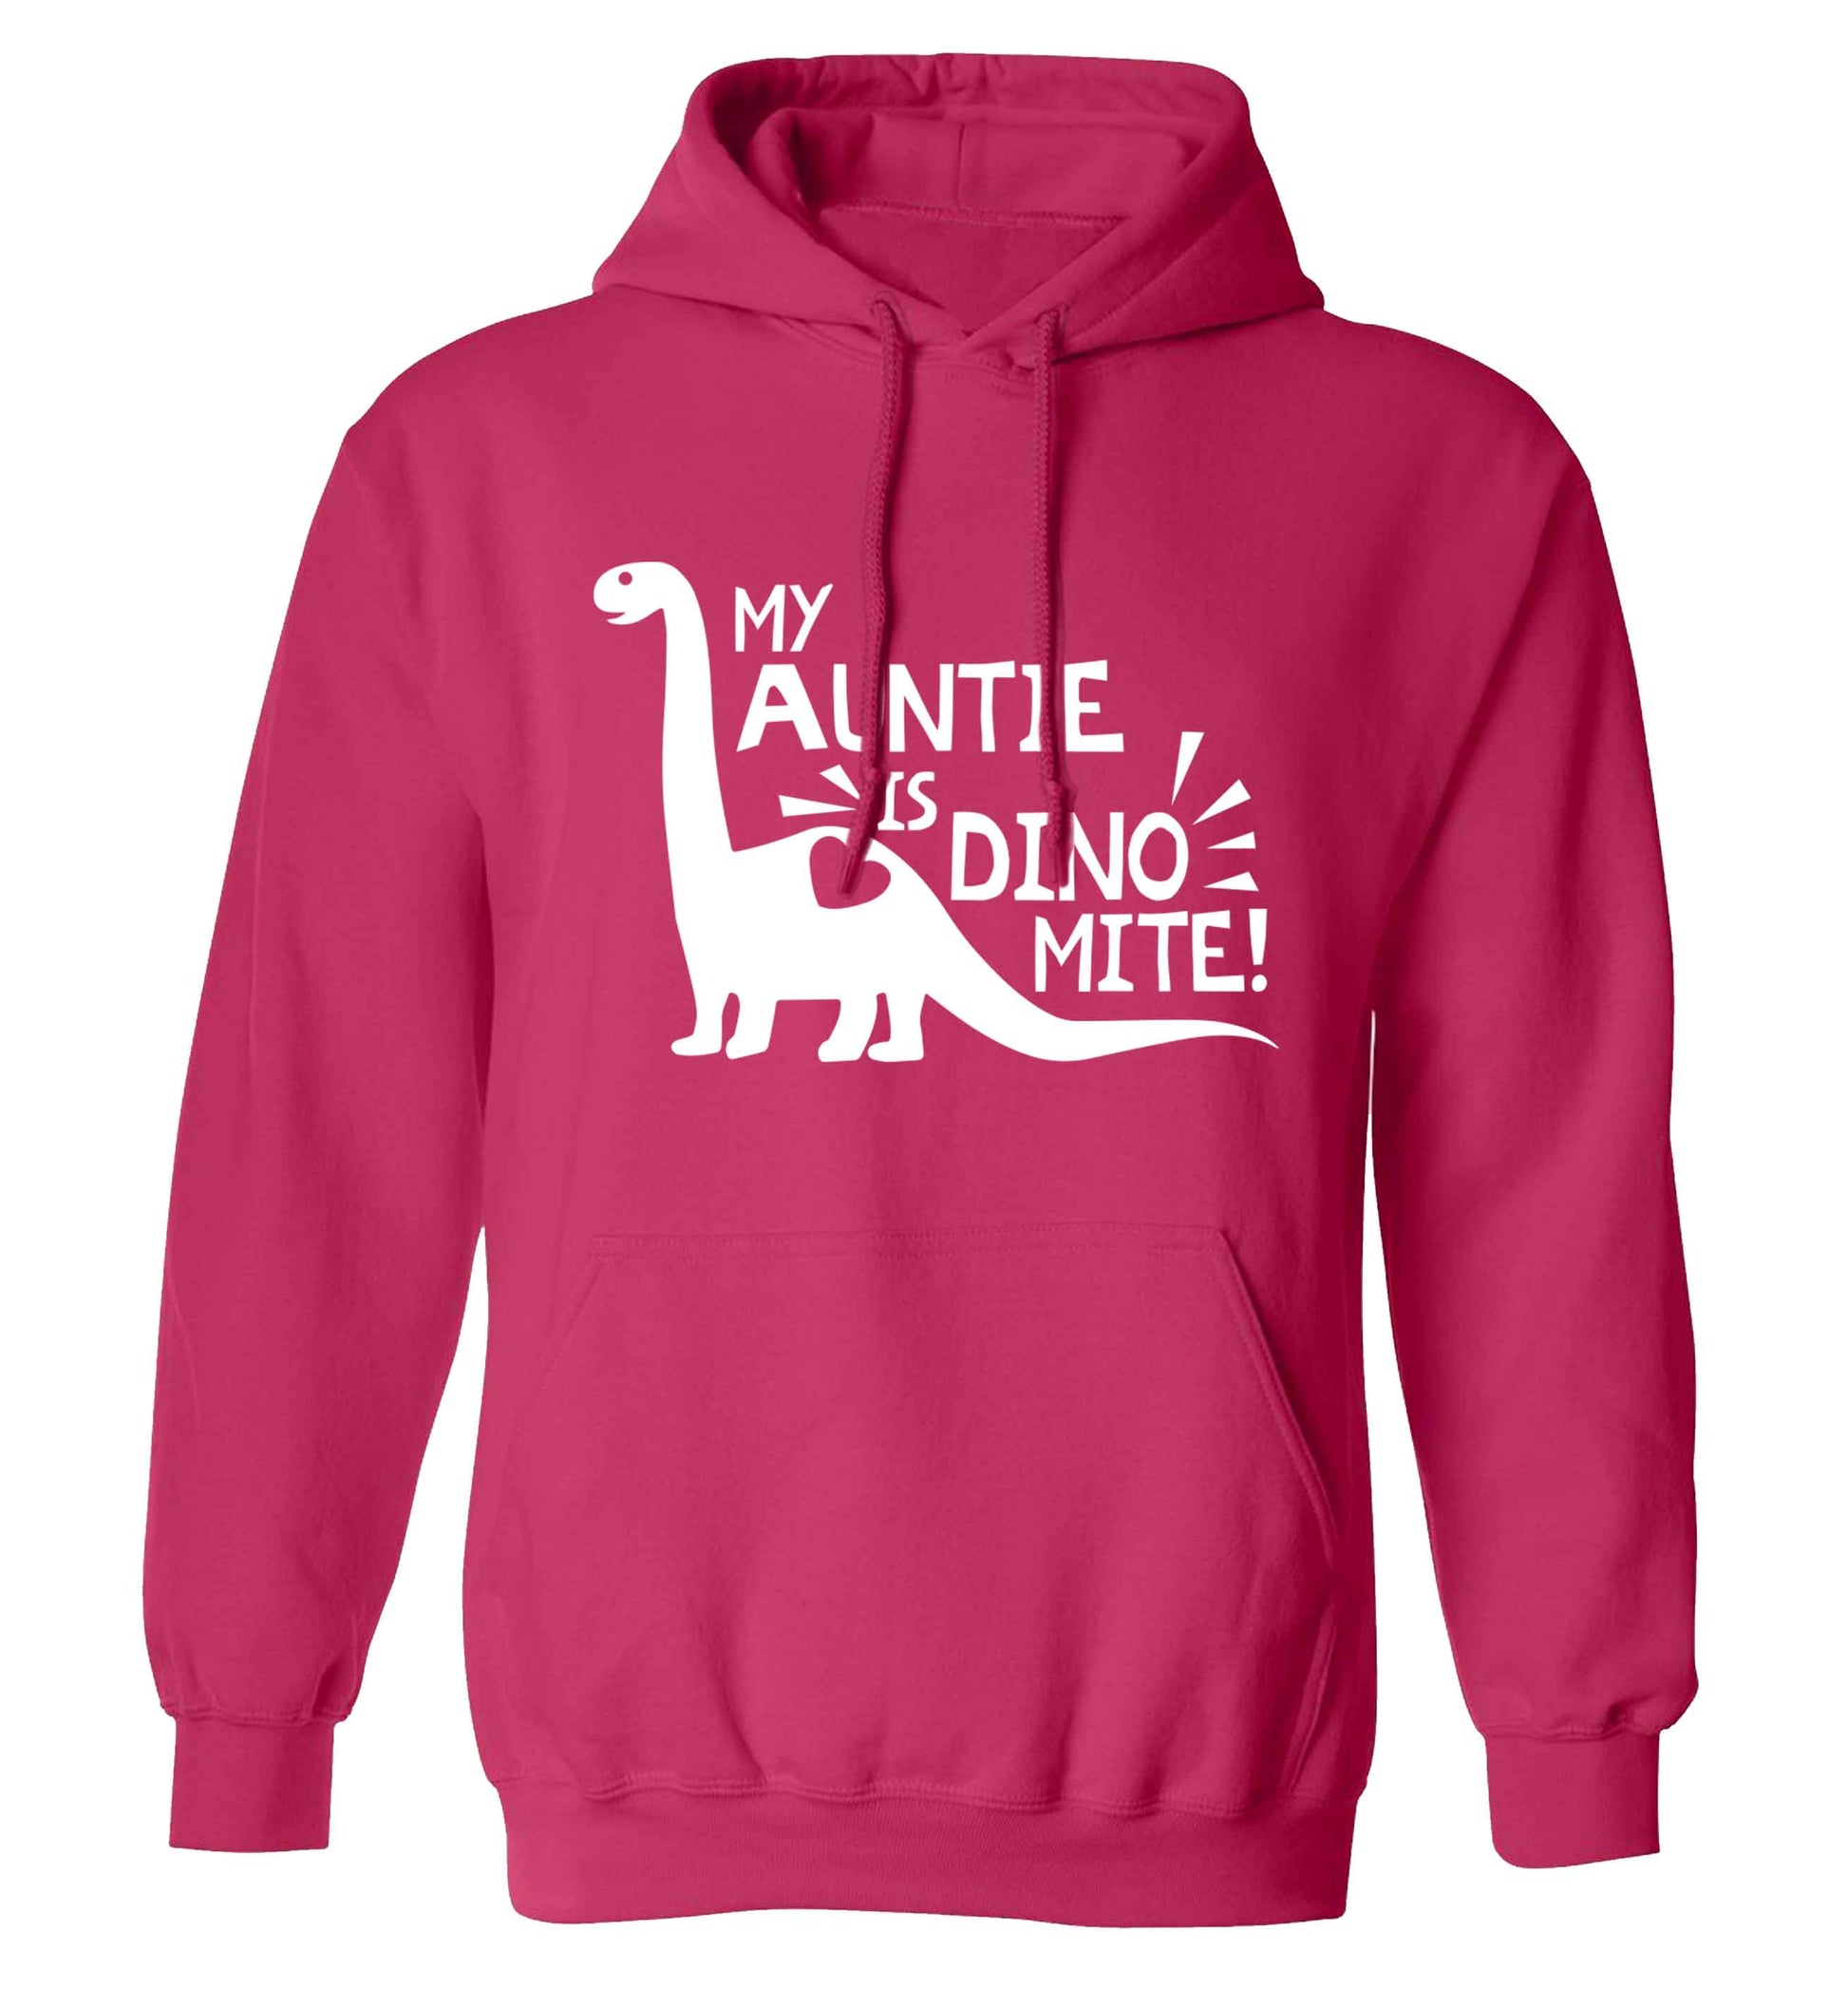 My auntie is dinomite! adults unisex pink hoodie 2XL